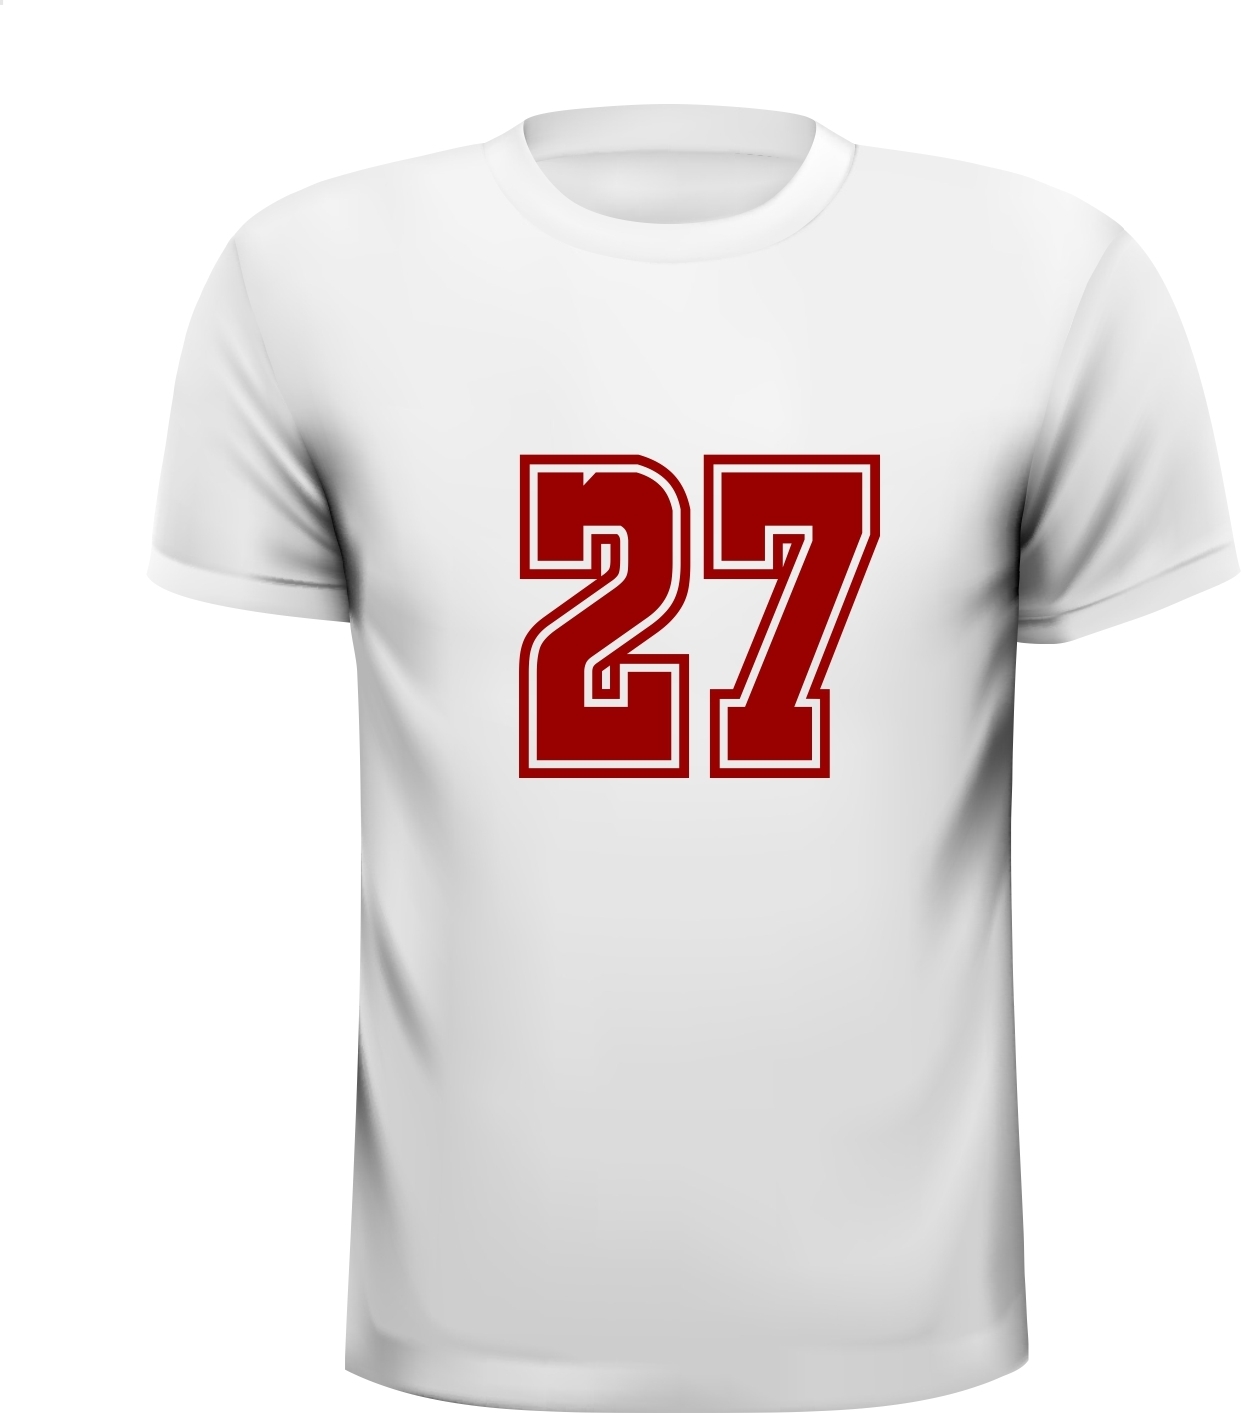 getal 27 wit shirt robijnrode cijfers